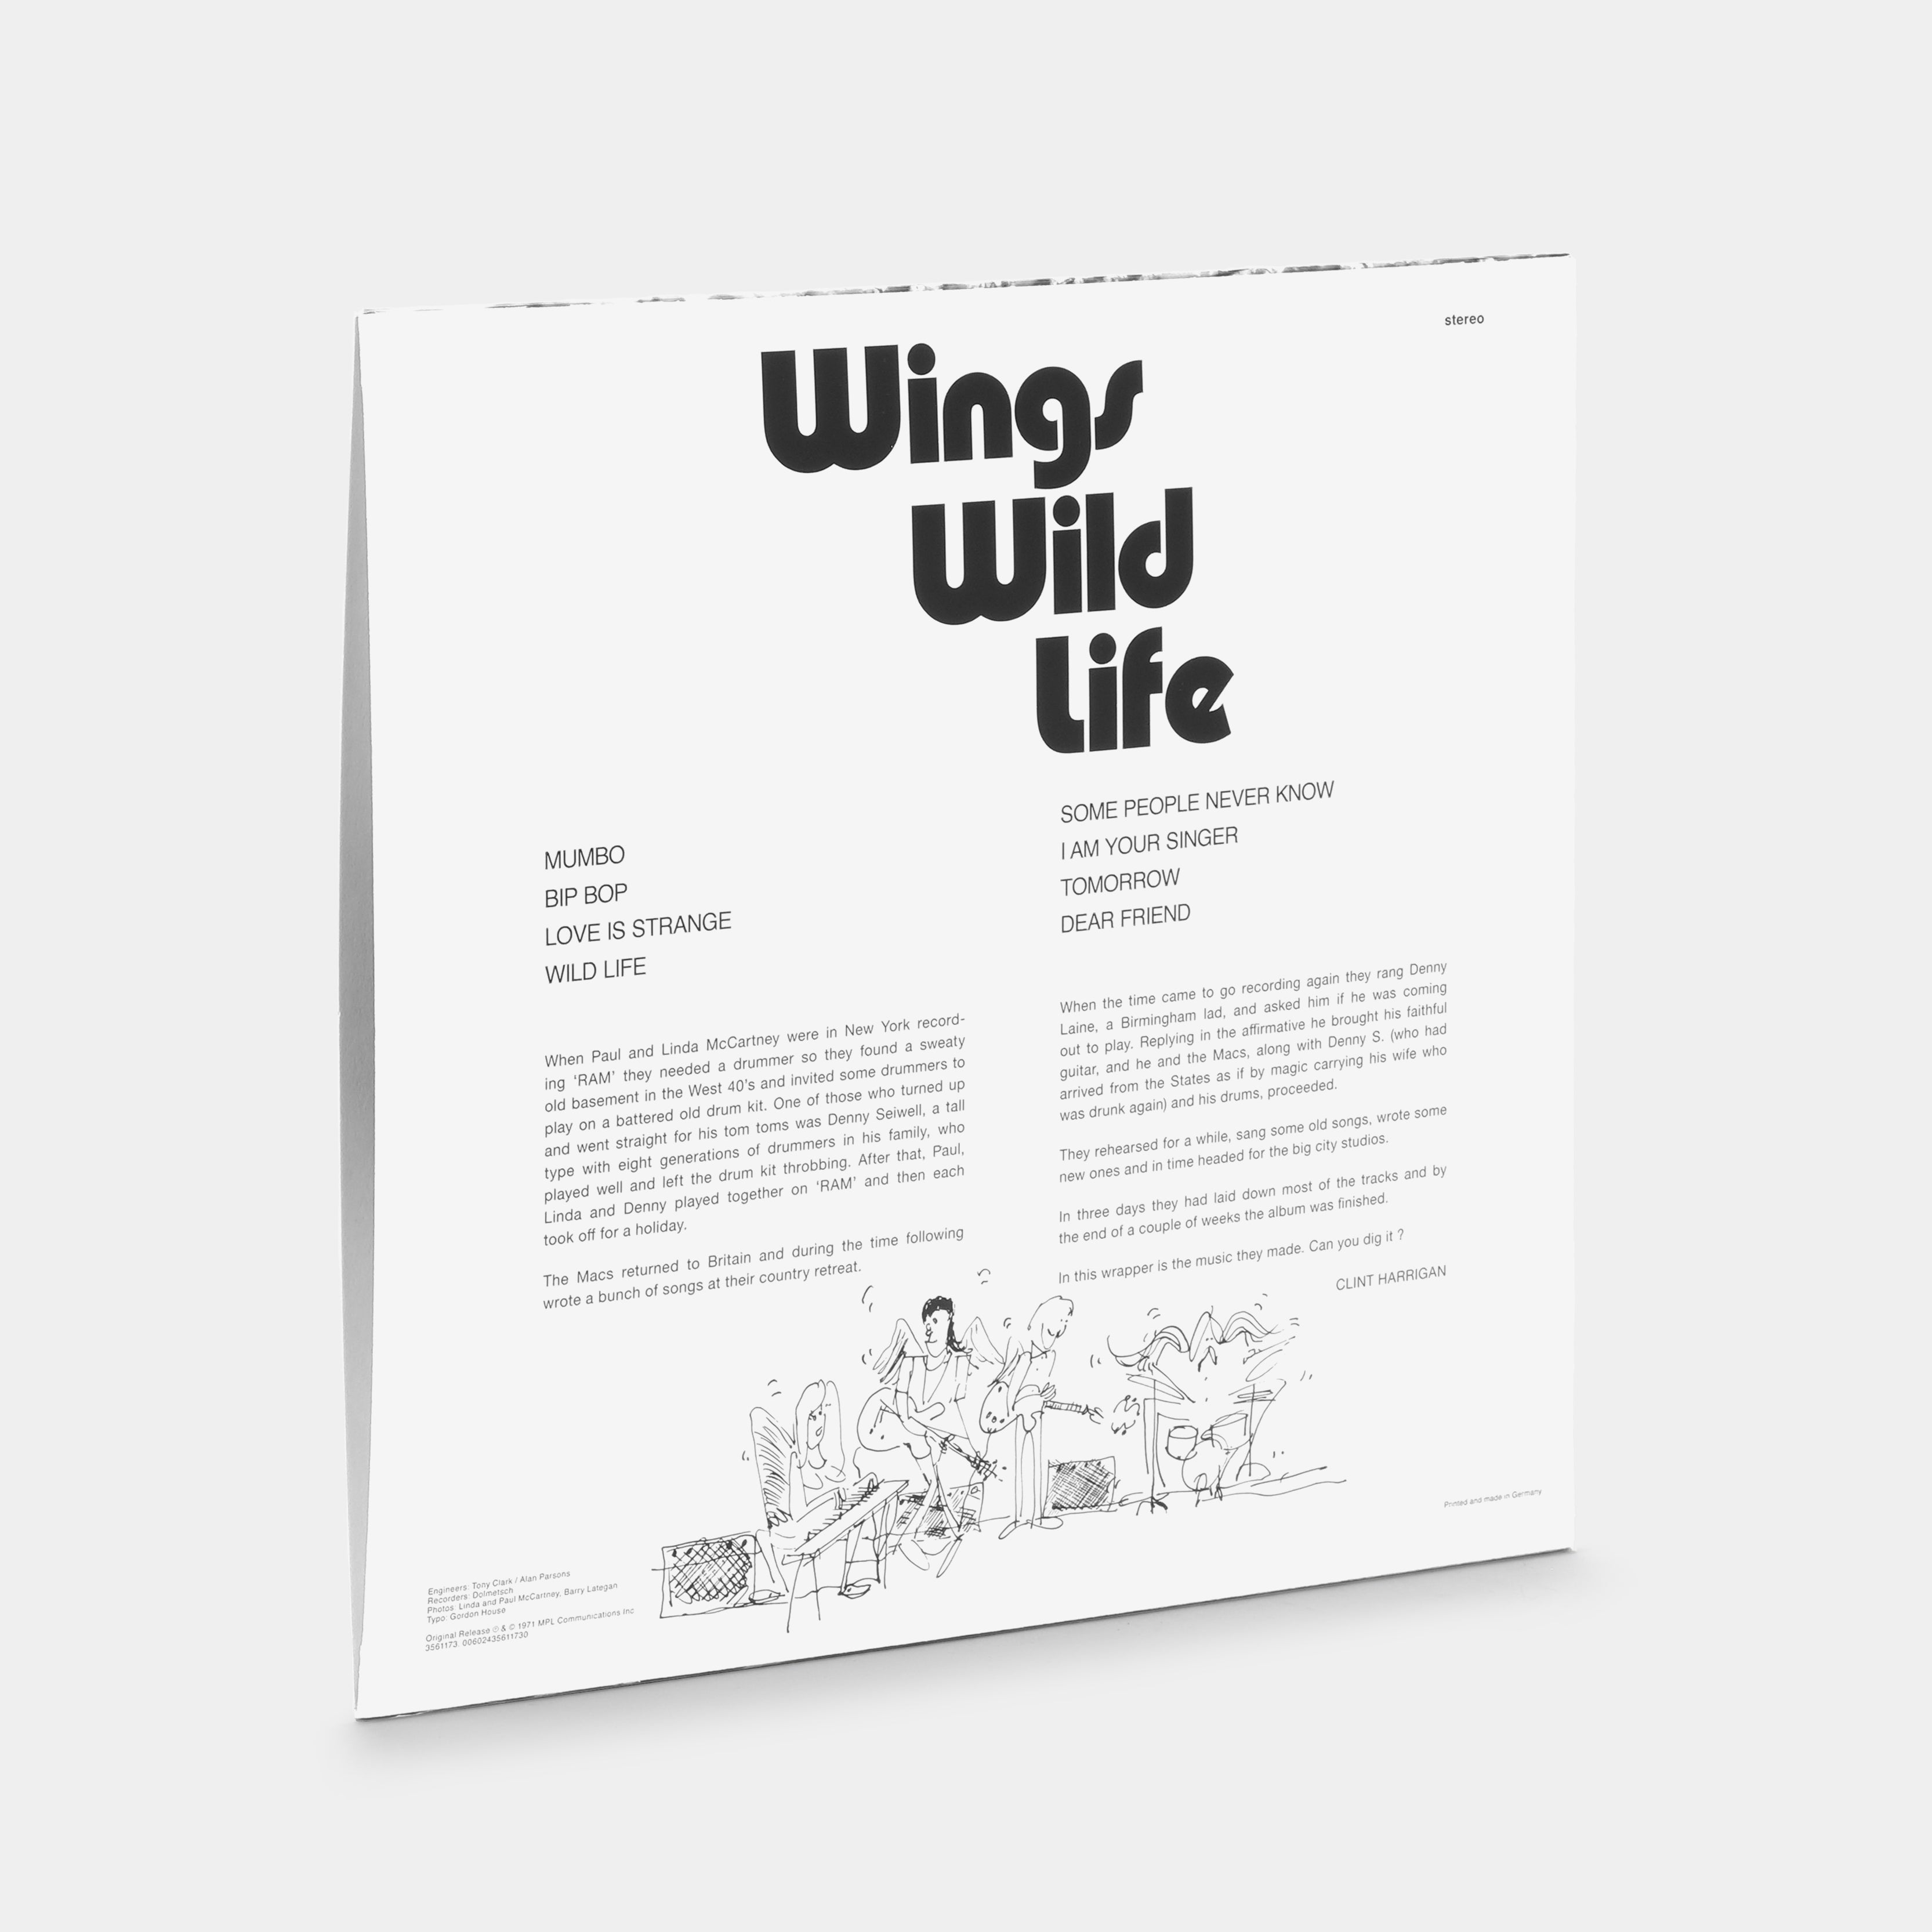 Paul McCartney and Wings - Wild Life (Half-Speed Mastering) LP Vinyl Record